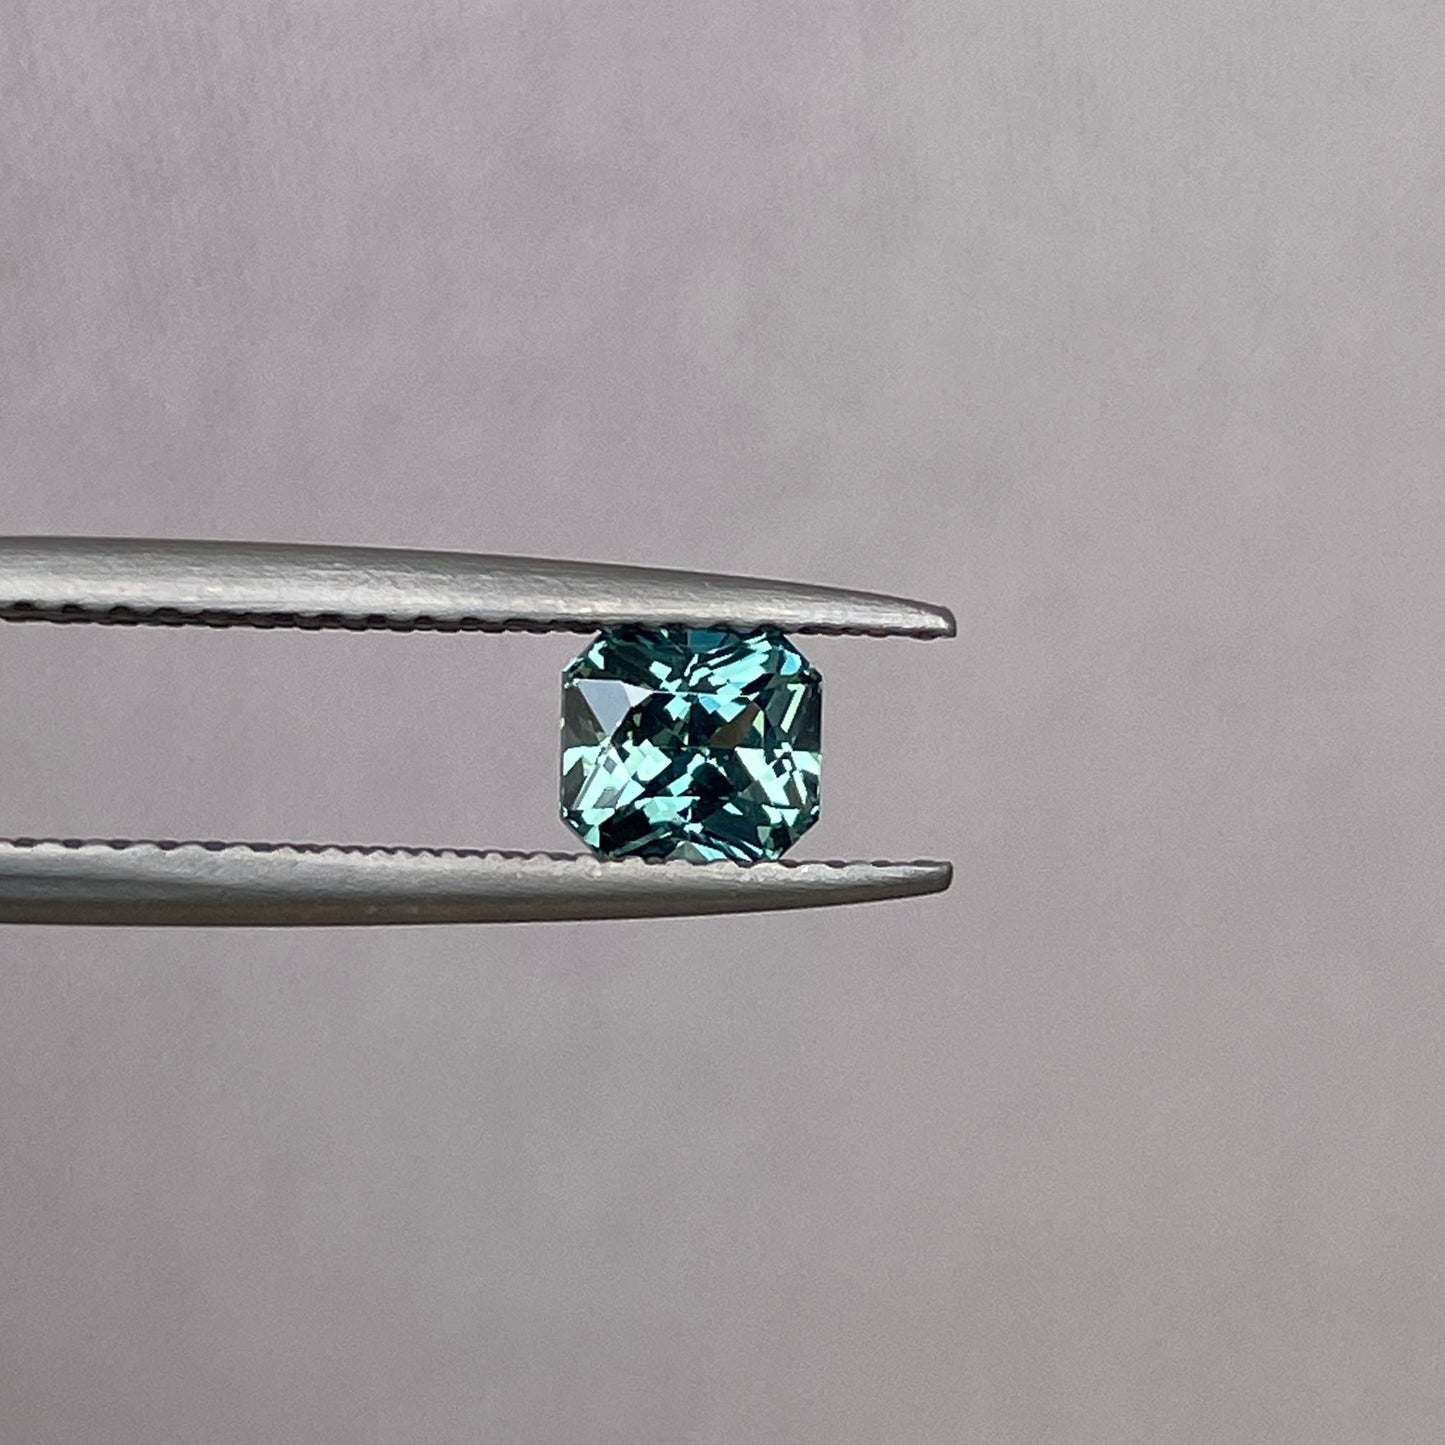 Greenish blue sapphire, 0.79 crt.